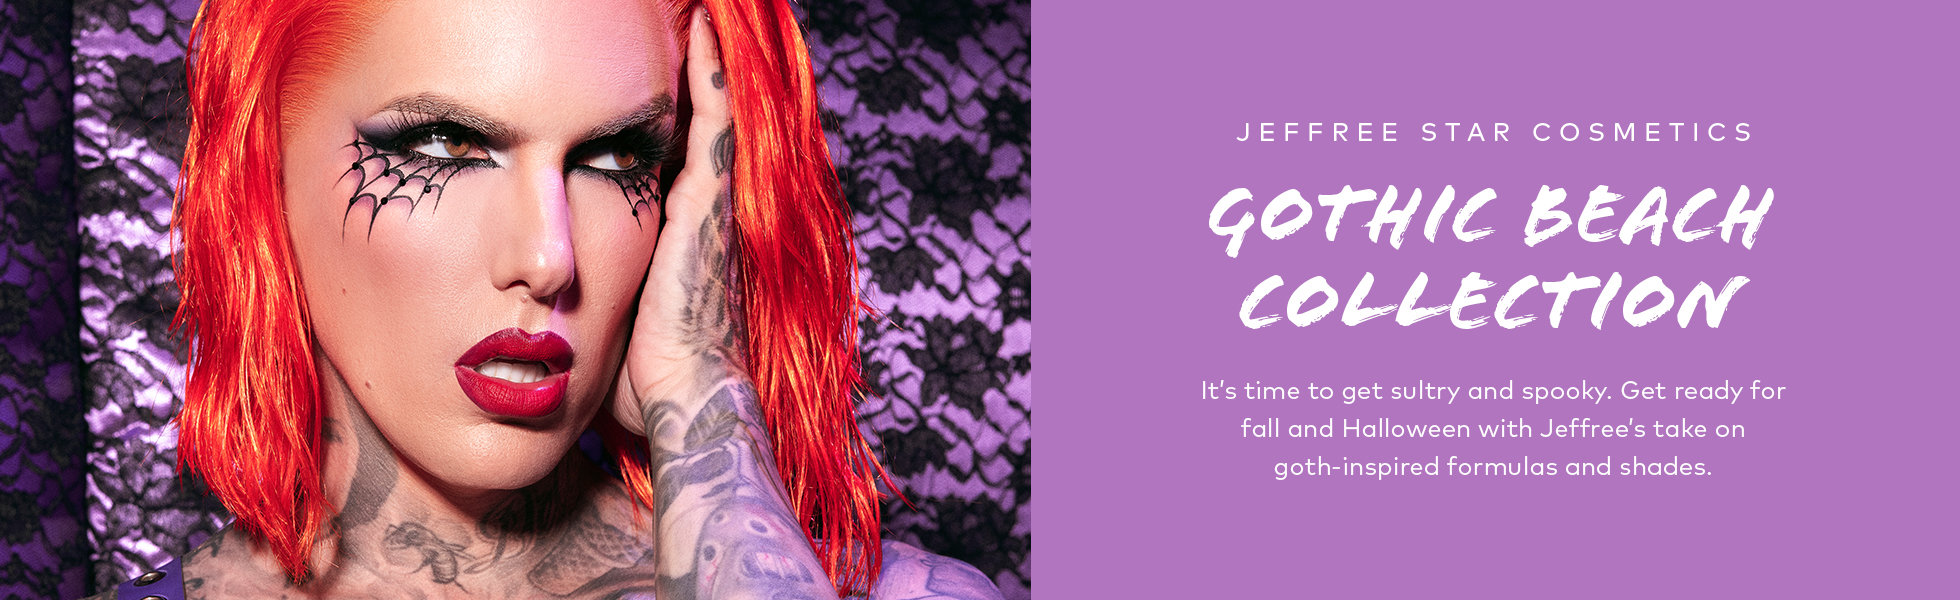 Shop the Jeffree Star Cosmetics Gothic Beach Collection on Beautylish.com!